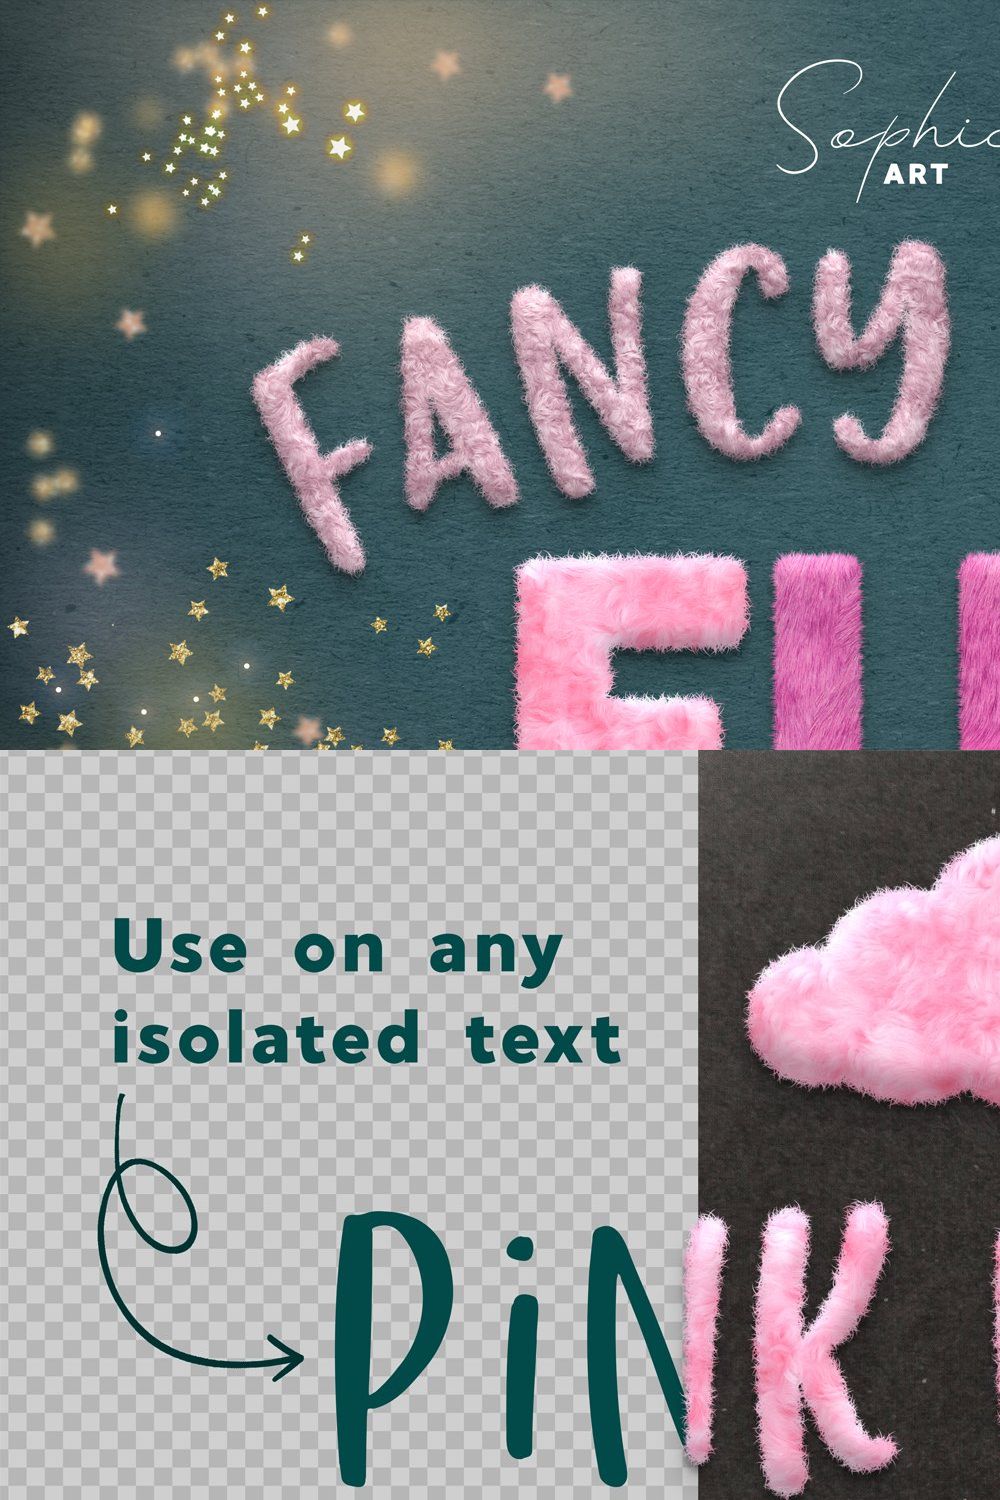 Fanсy Pink Fur Photoshop Effect pinterest preview image.